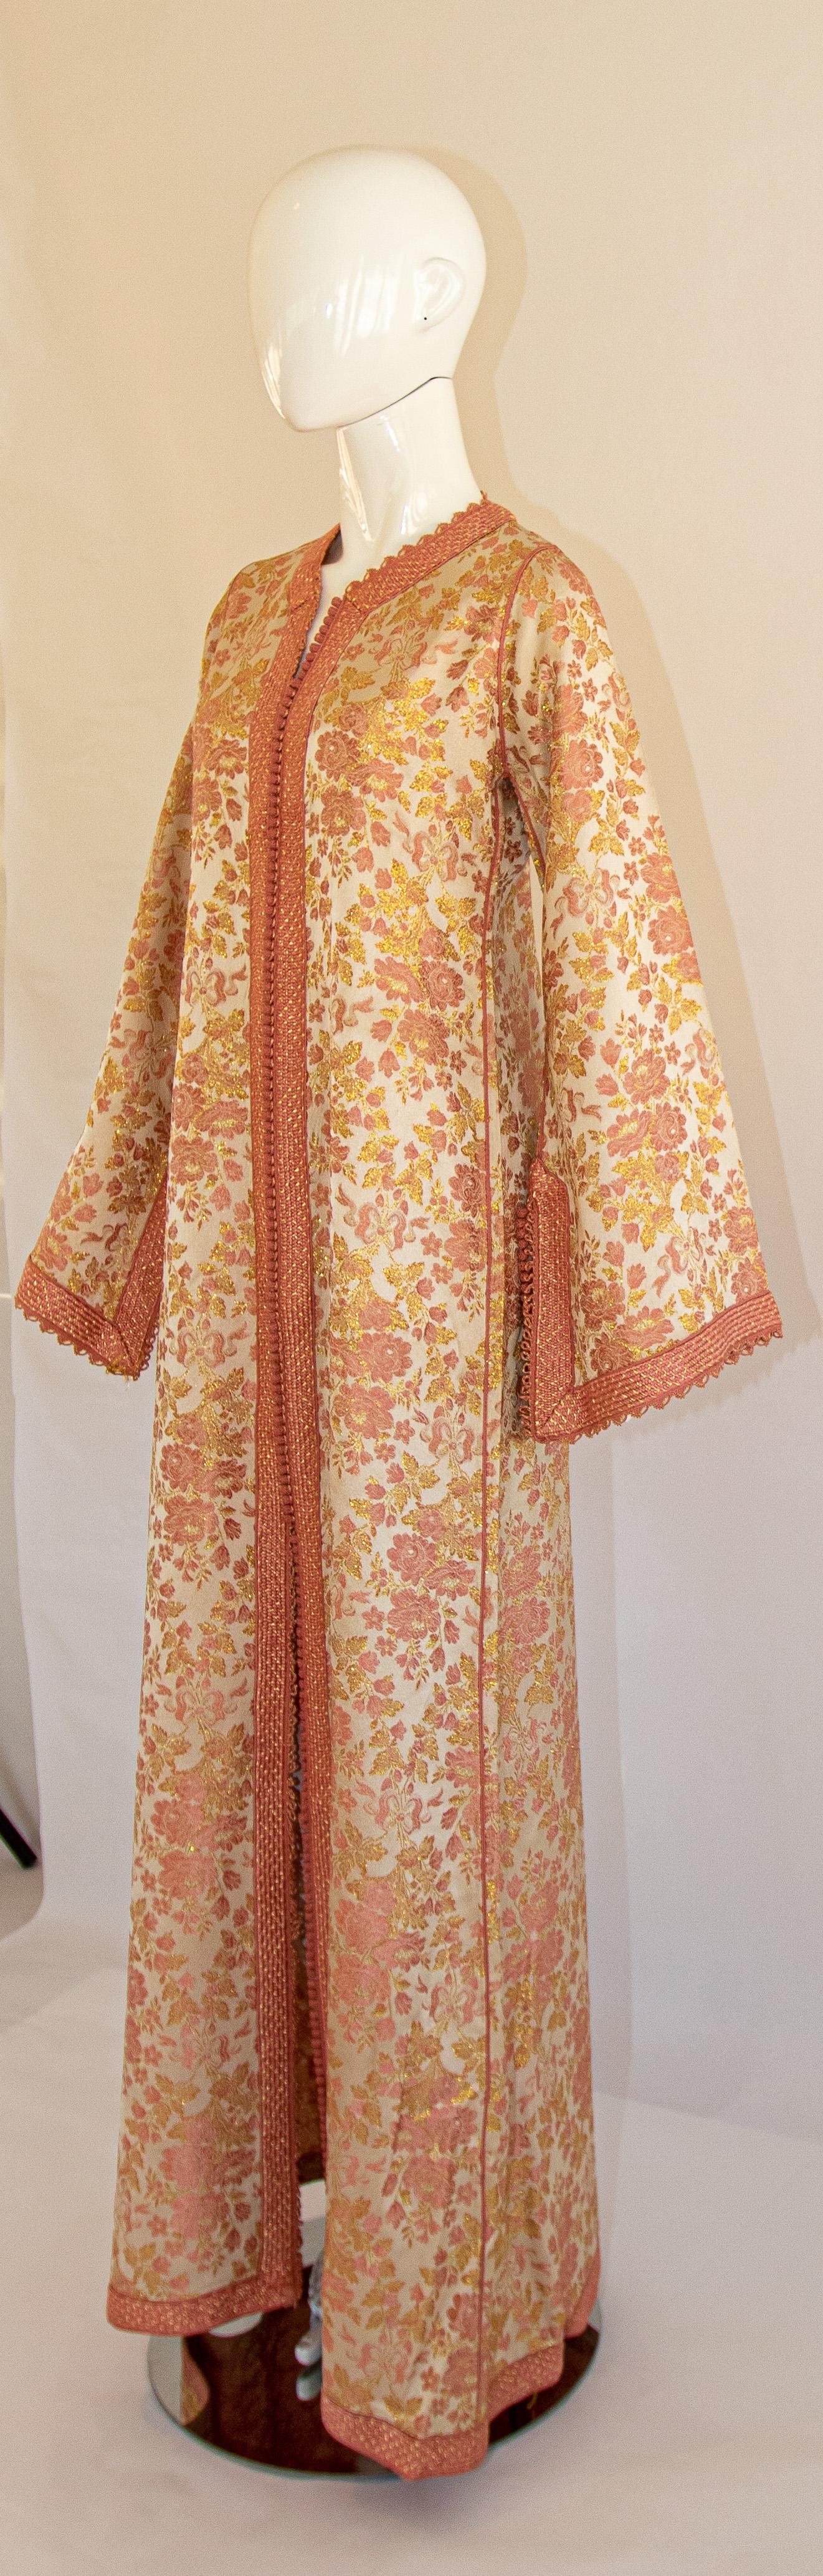 Moroccan Caftan, Blush Pink and Gold Brocade Vintage Kaftan Size Medium 10